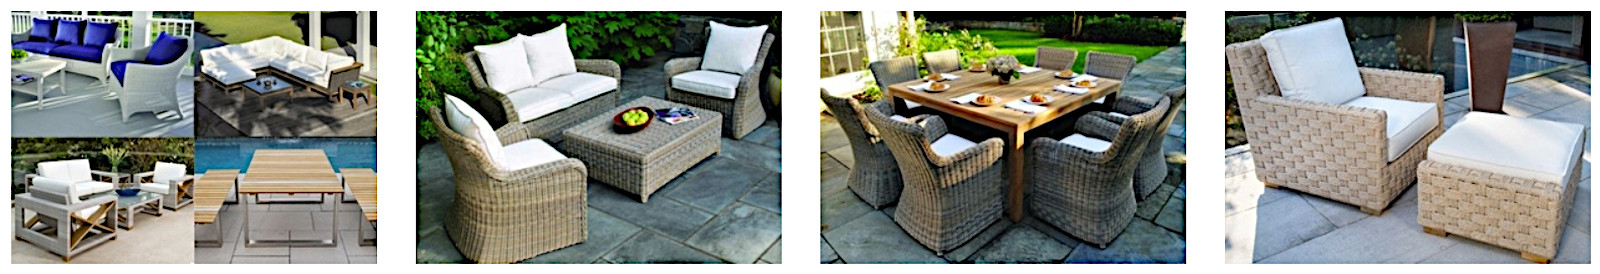 Promotional Price Kingsley Bate teak garden furniture